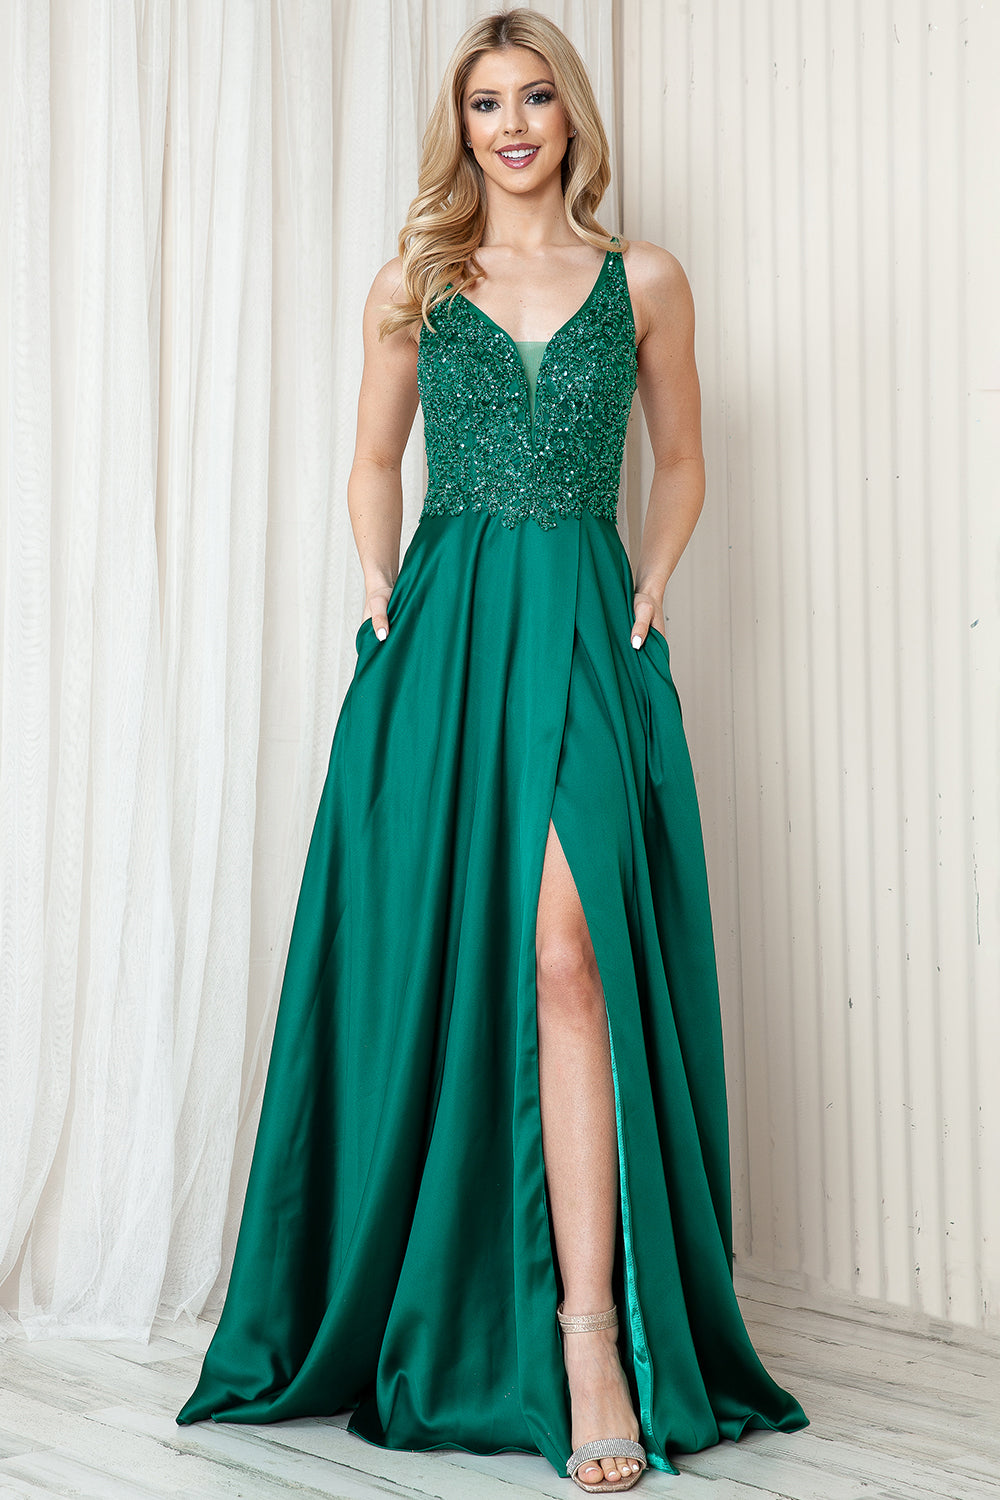 Front Slit Embroidered Bodice Straps Satin Skirt Long Prom Dress AC6120-Prom Dress-smcfashion.com